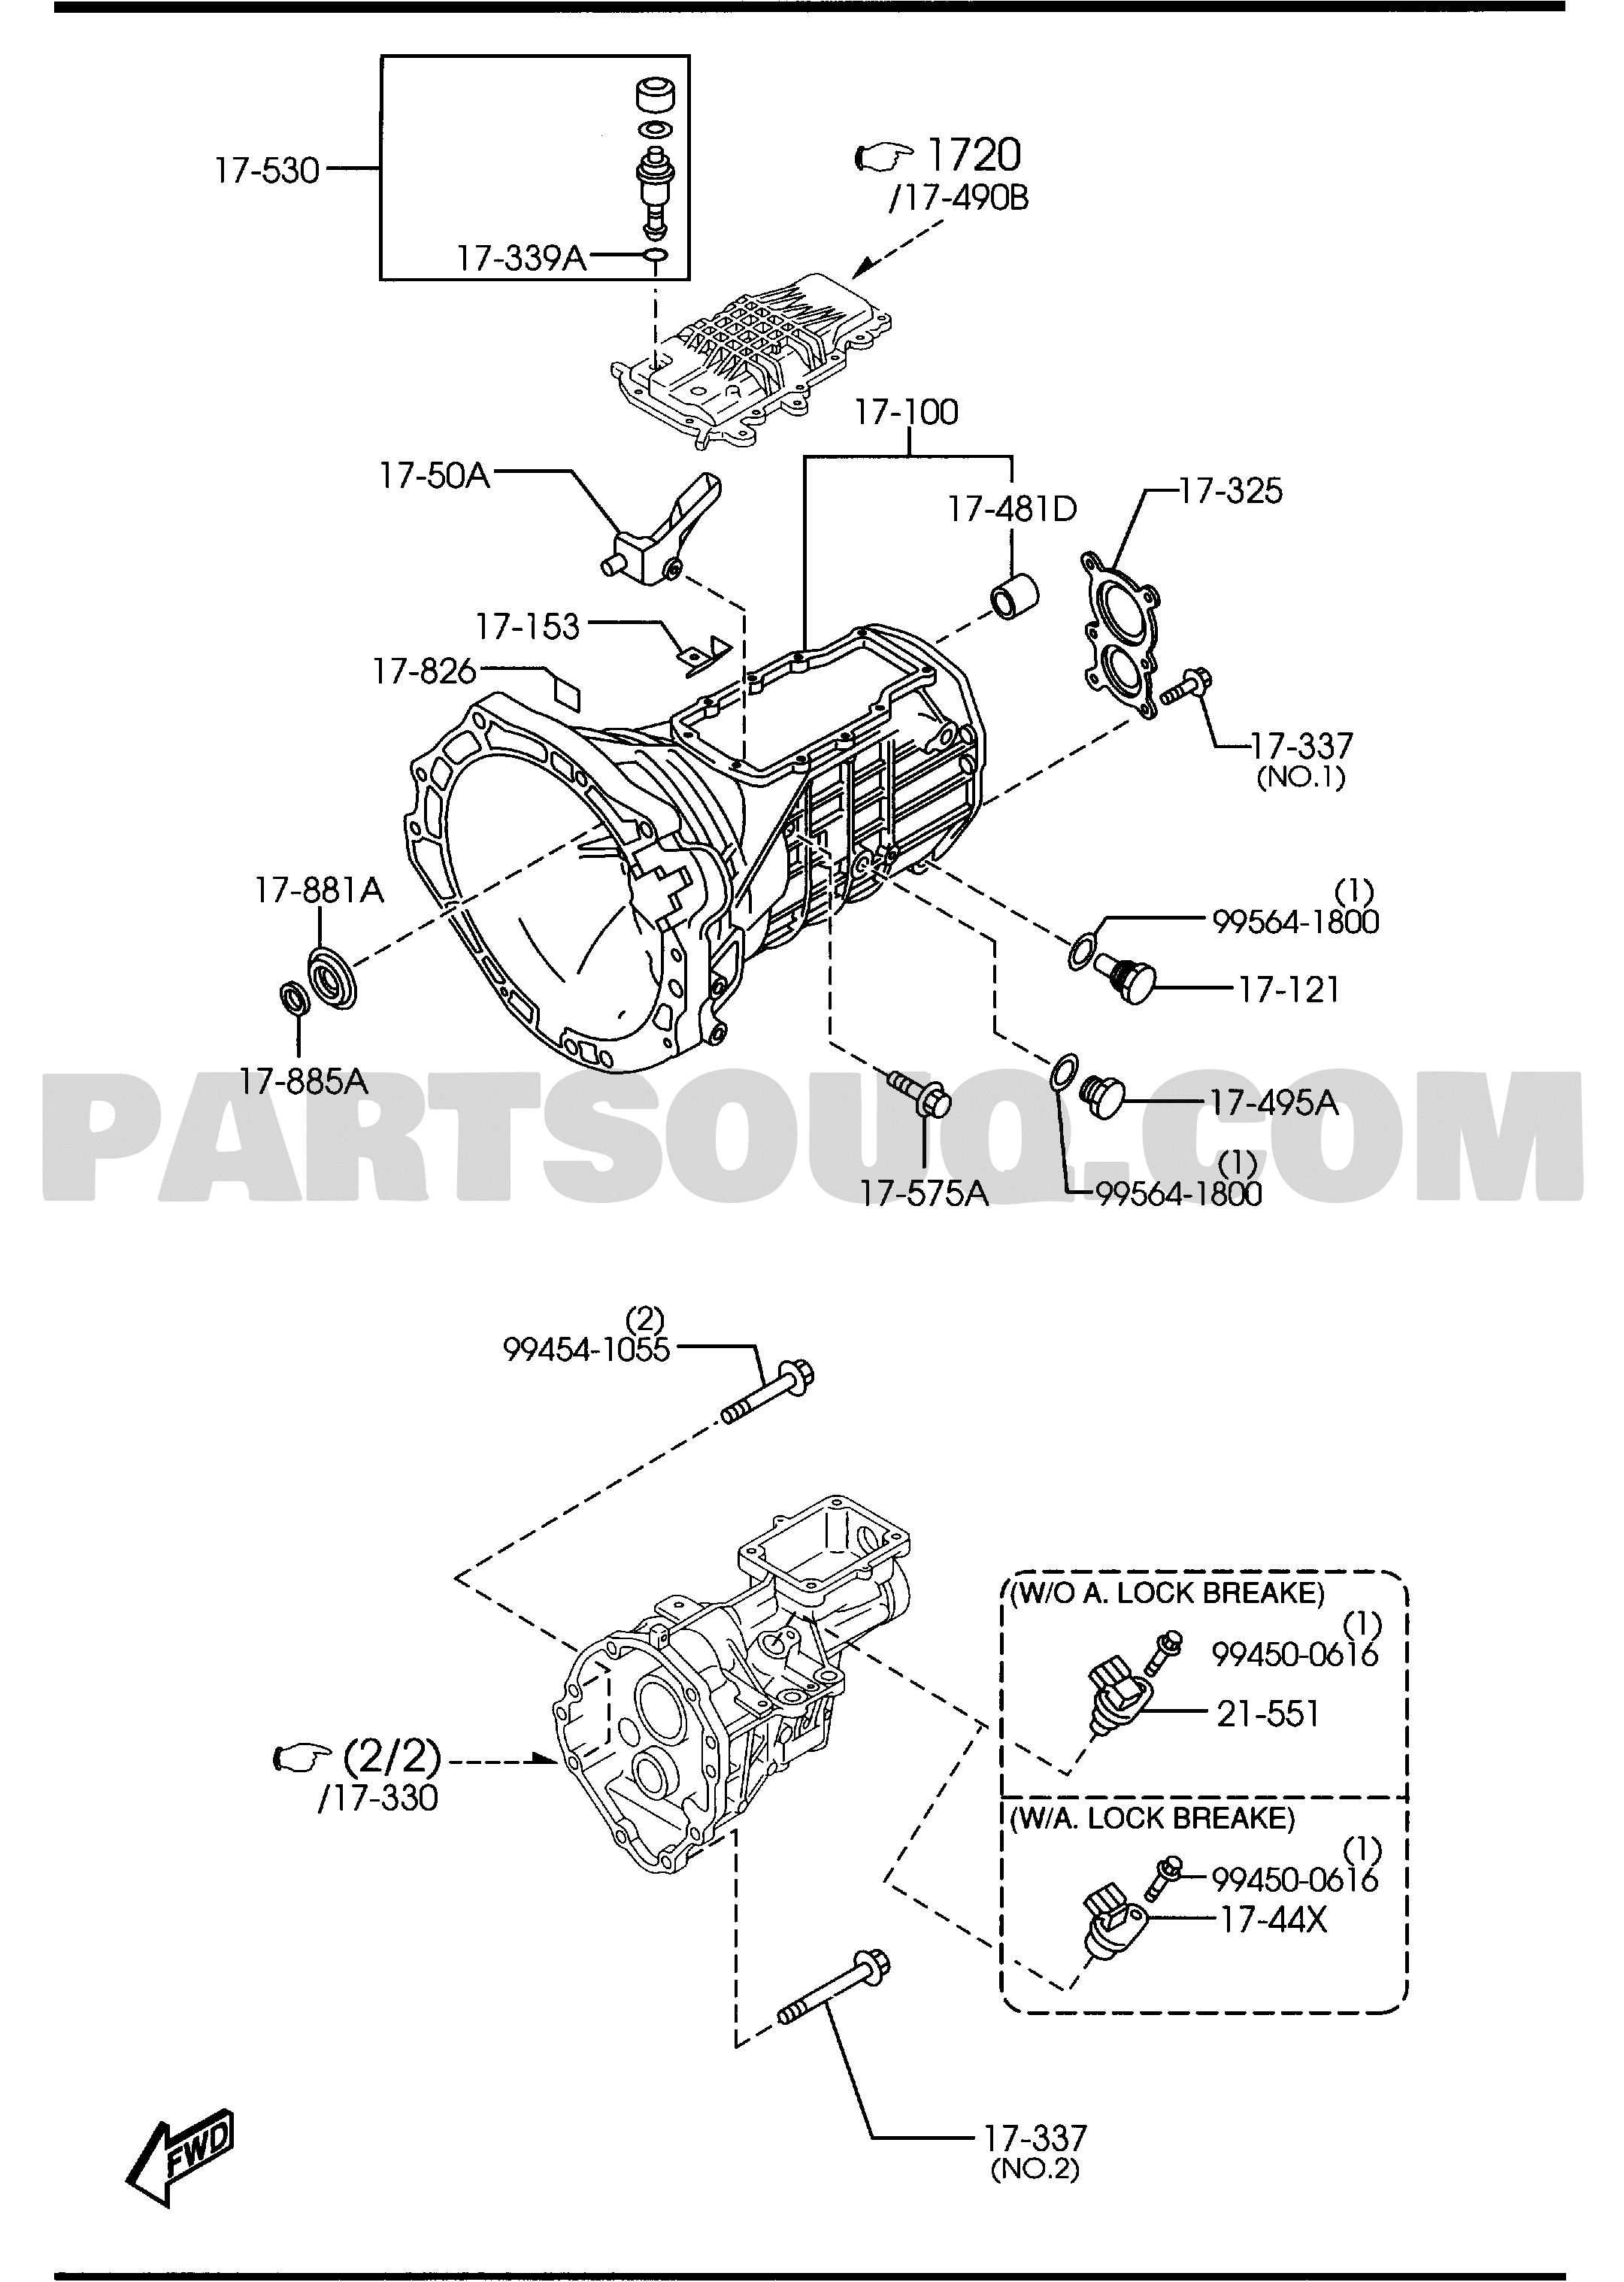 Mazda P610-17-335 Manual Trans Extension Housing Seal 